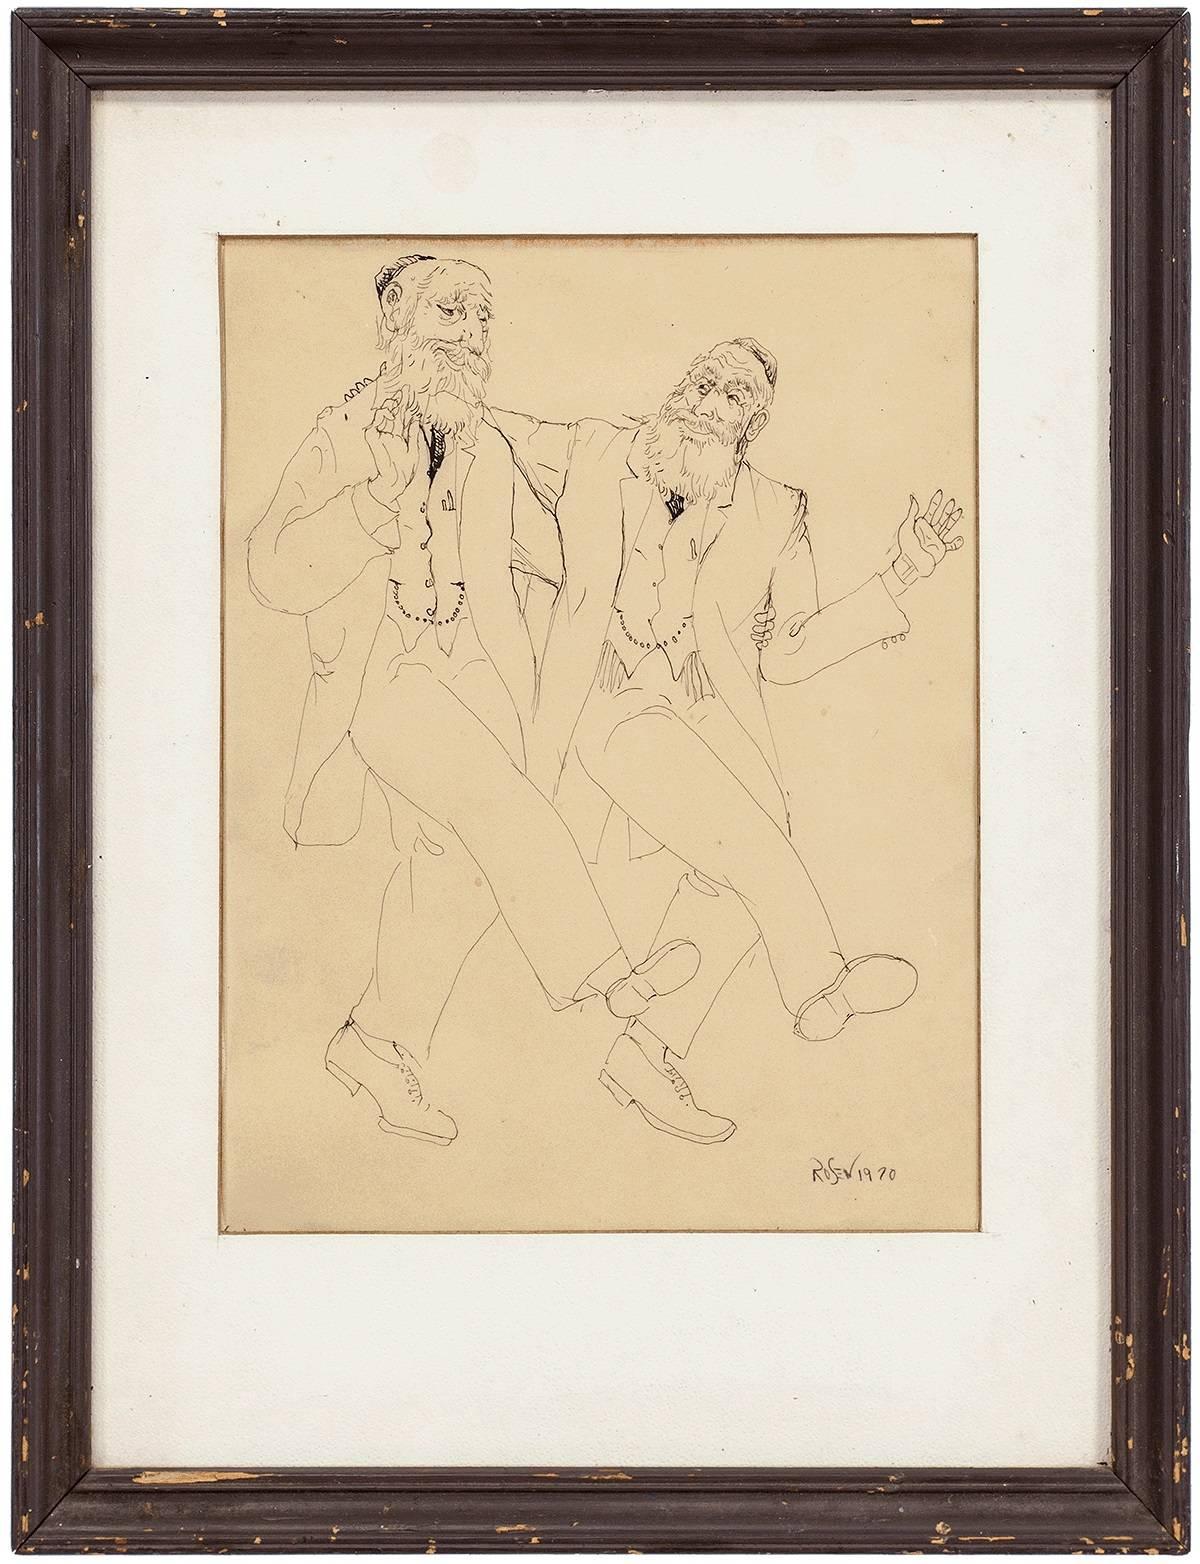 David Rosen (b.1912) Figurative Art - Two Jewish Men Dancing, Modernist Judaica Drawing